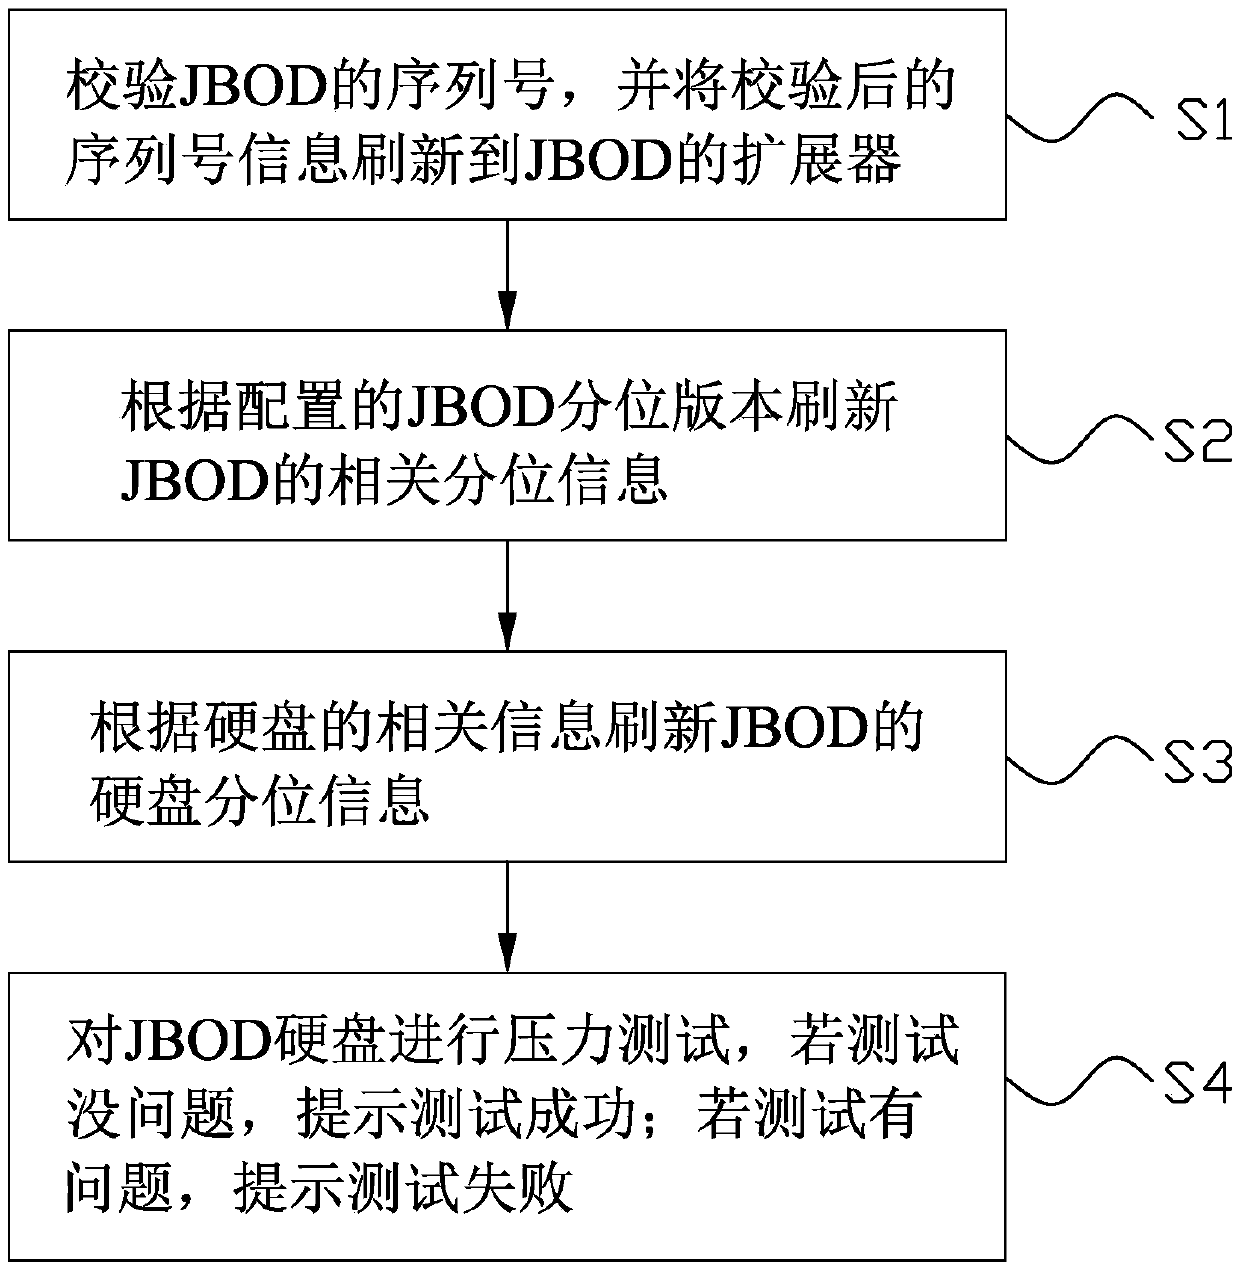 JBOD test method and system based on a universal server